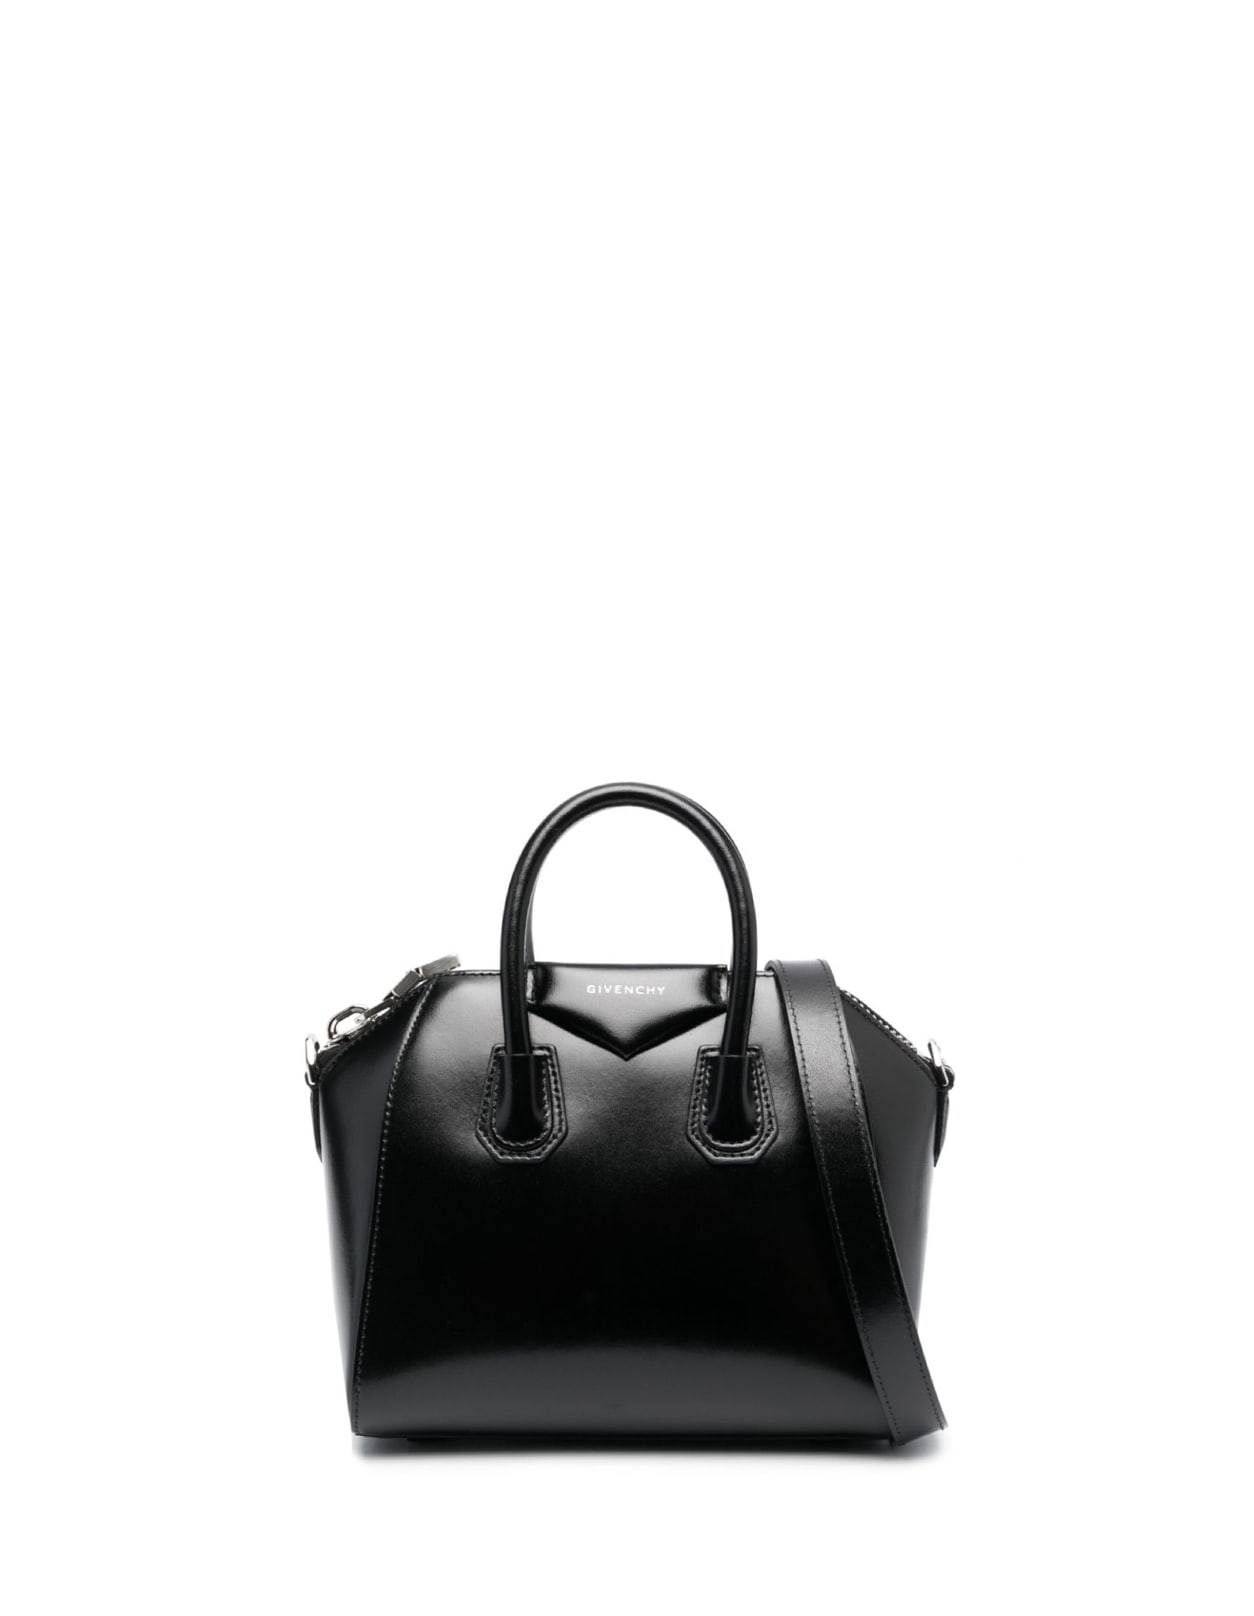 Givenchy Small Antigona Bag In Black Grain Leather